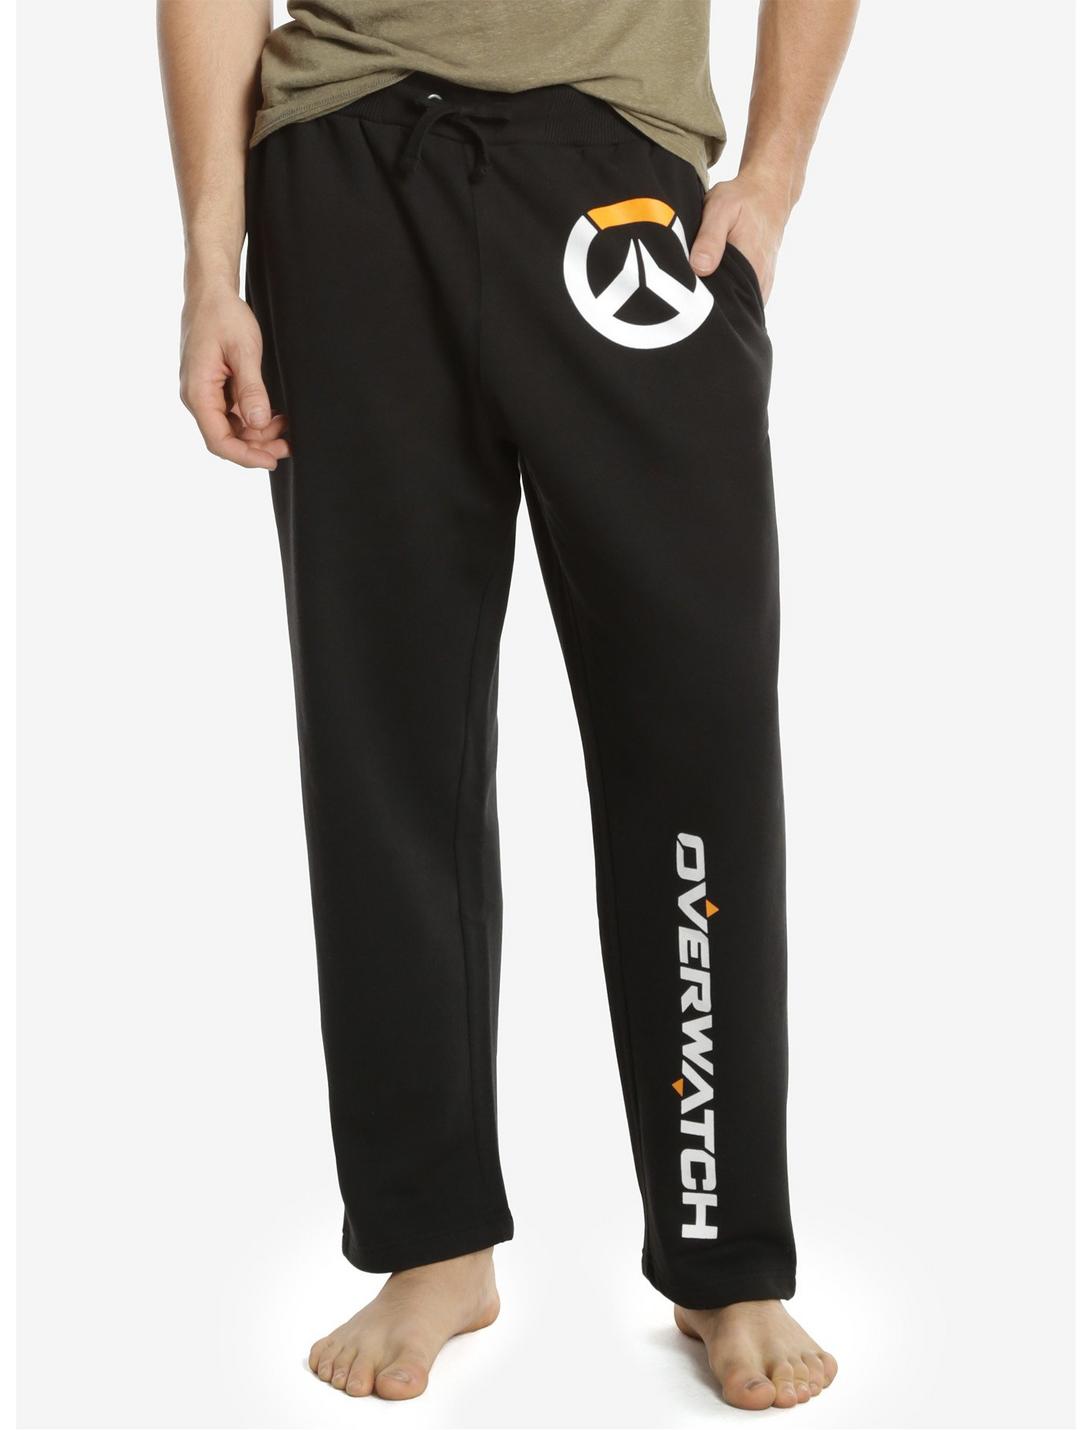 Overwatch Logo Lounge Pants, BLACK, hi-res